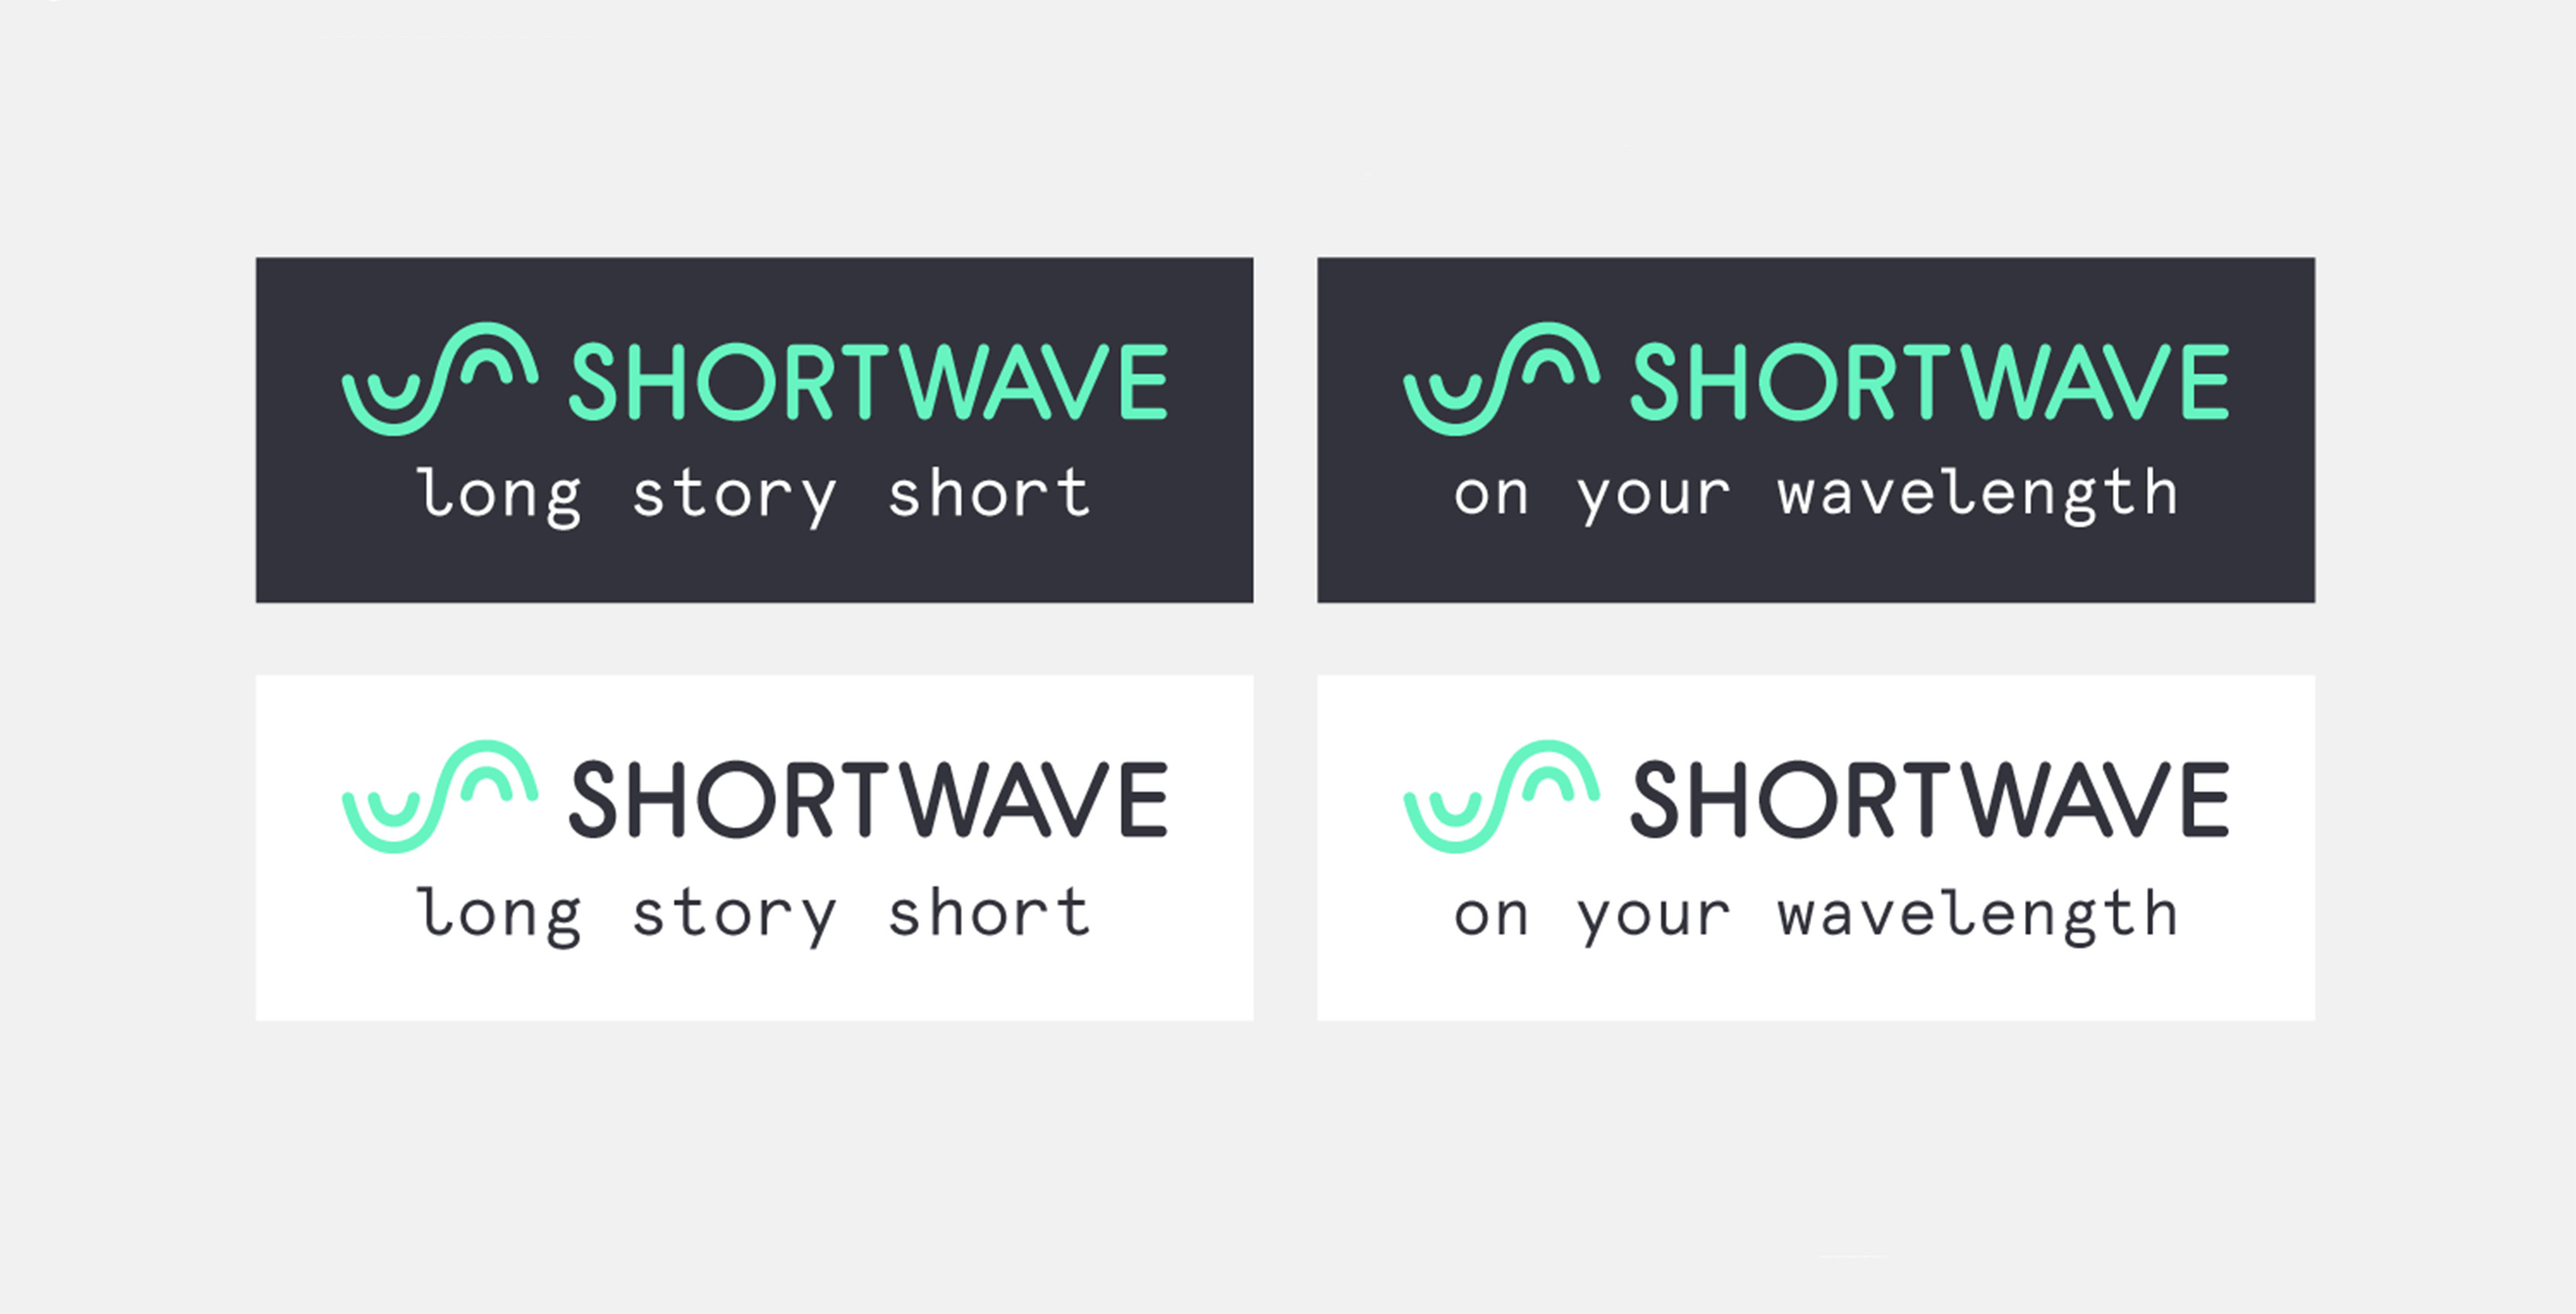 Shortwave logos and slogans